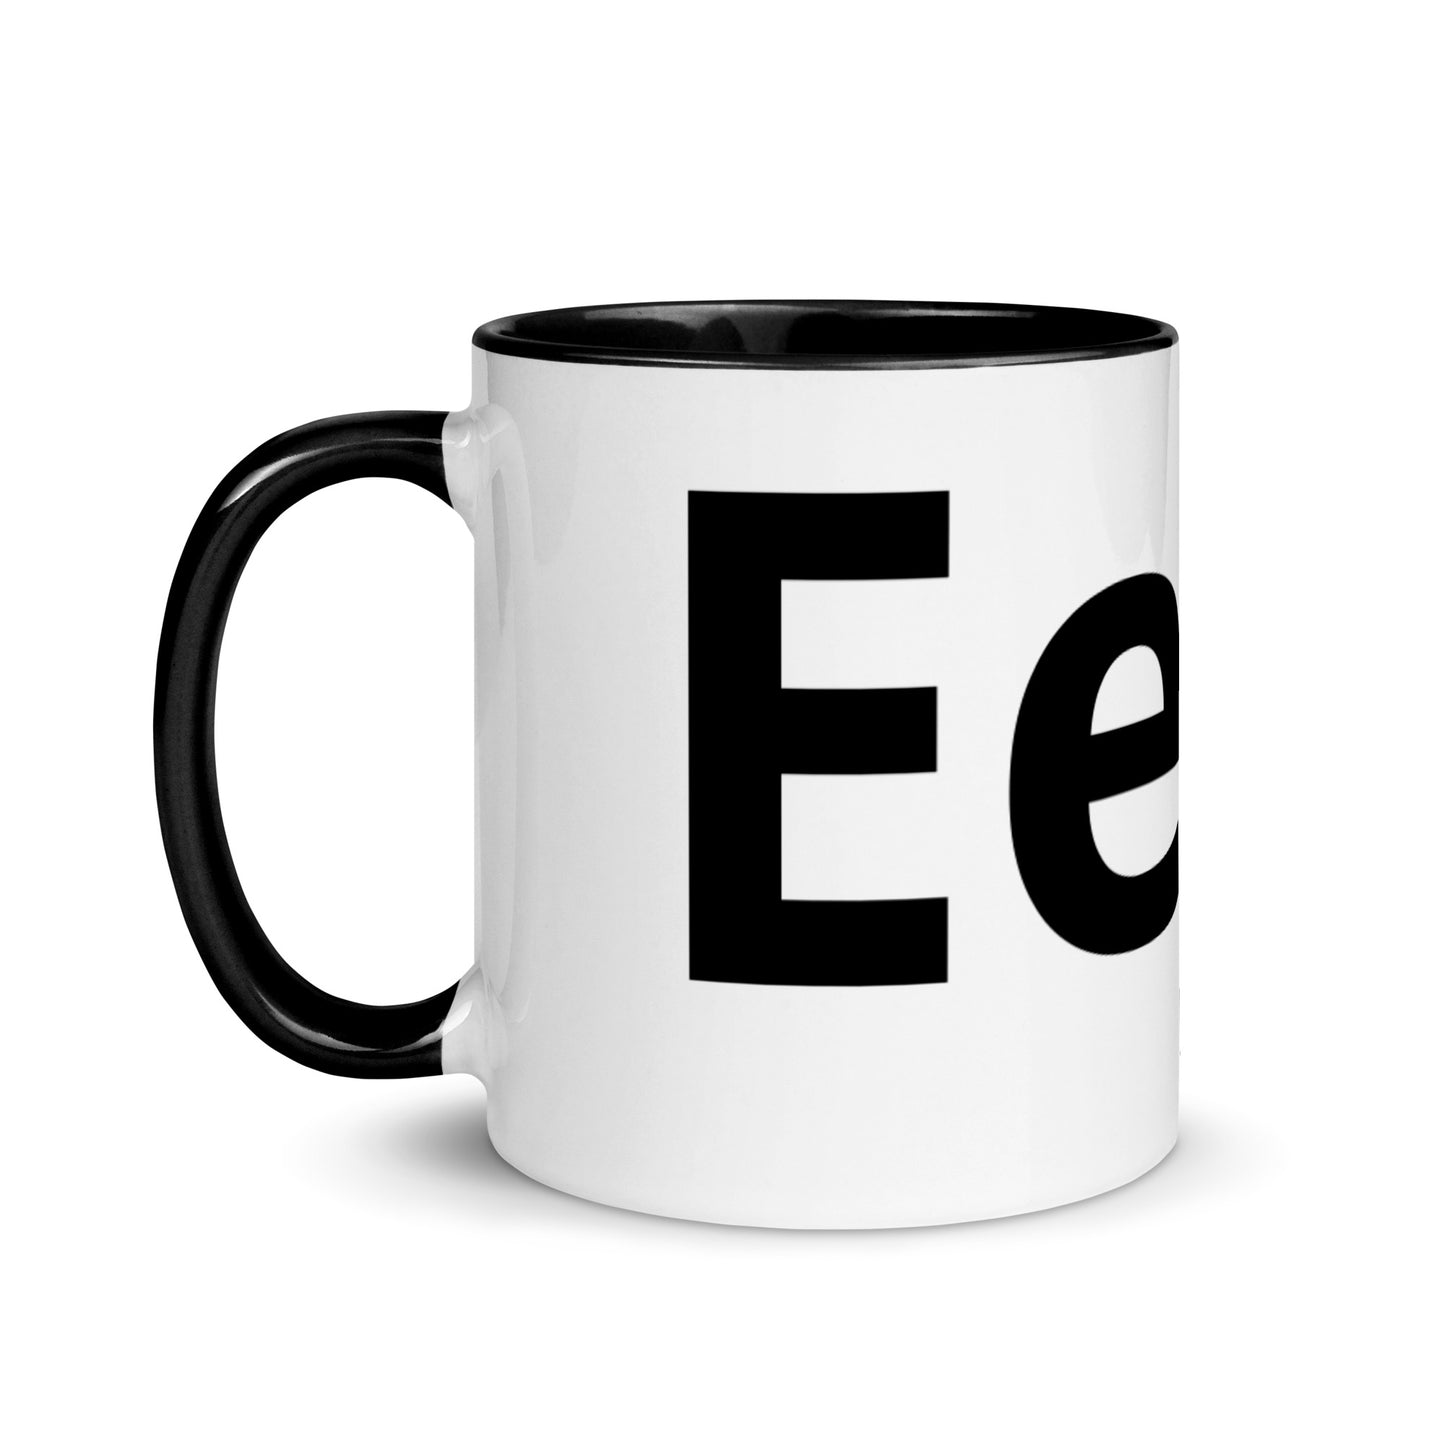 'Eejit' Enamel Mug Mug with Colour Inside